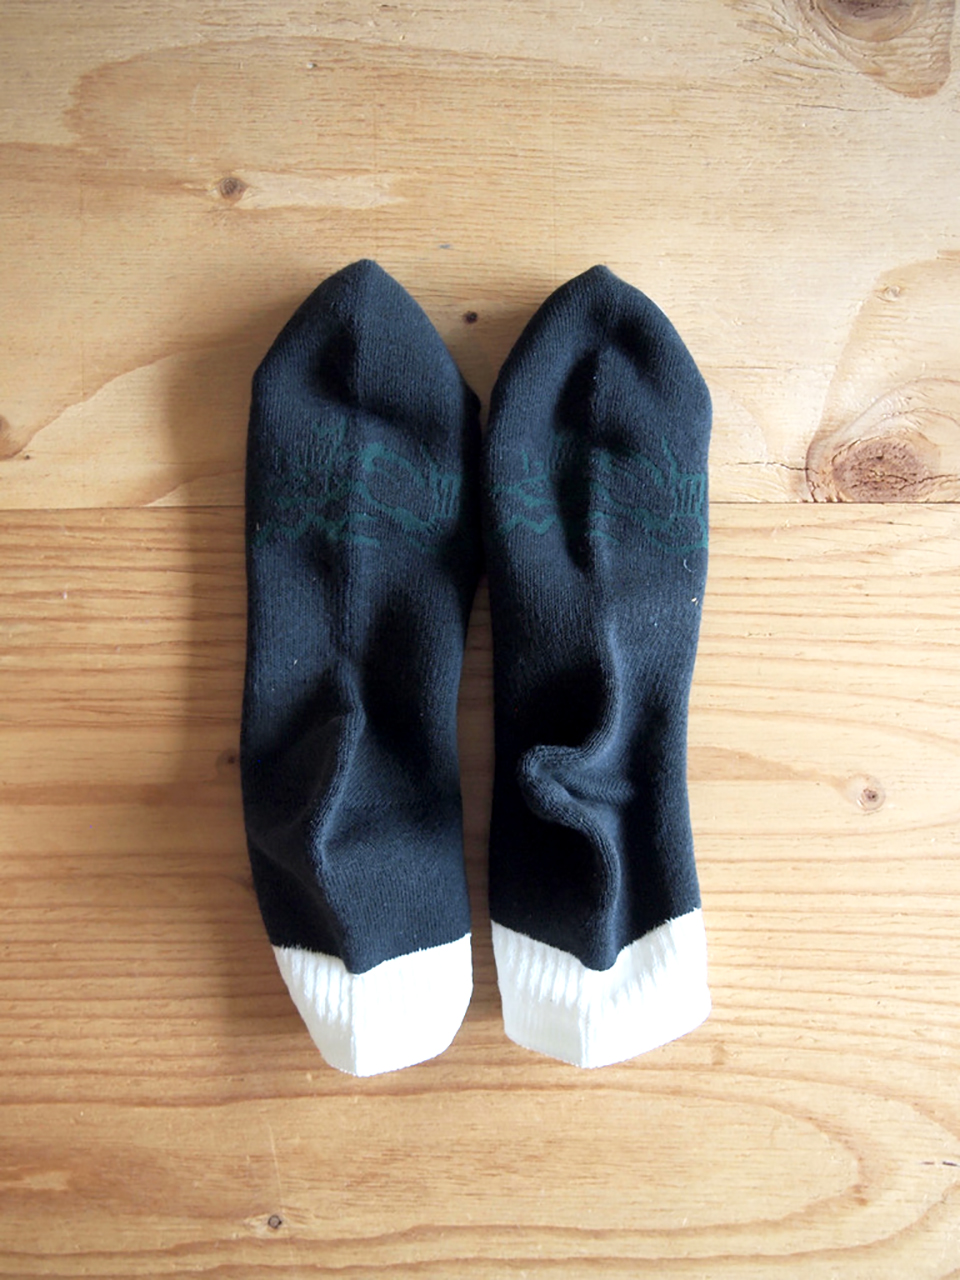 MY LOADS ARE LIGHT, New socks – notwonderstore